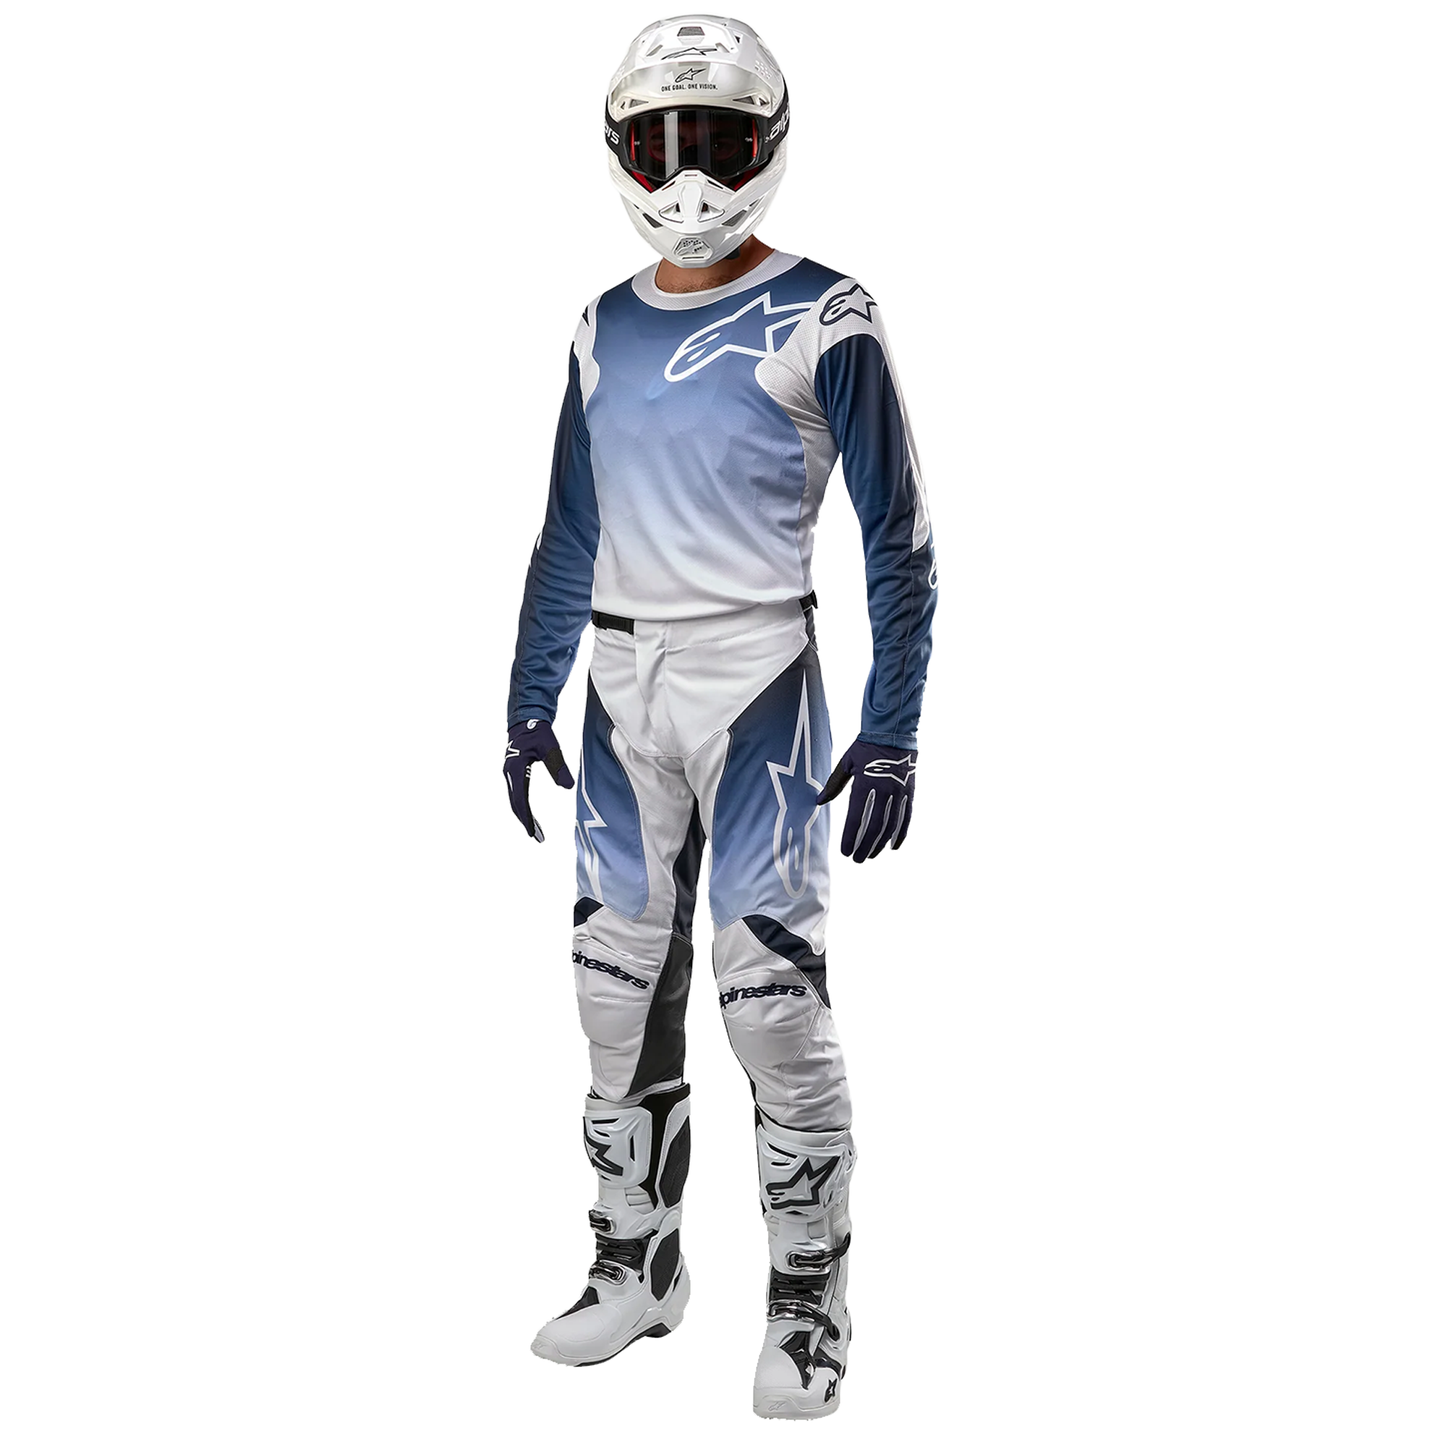 Alpinestars Racer Hoen Jersey - White/Dark Navy/Light Blue (2070)